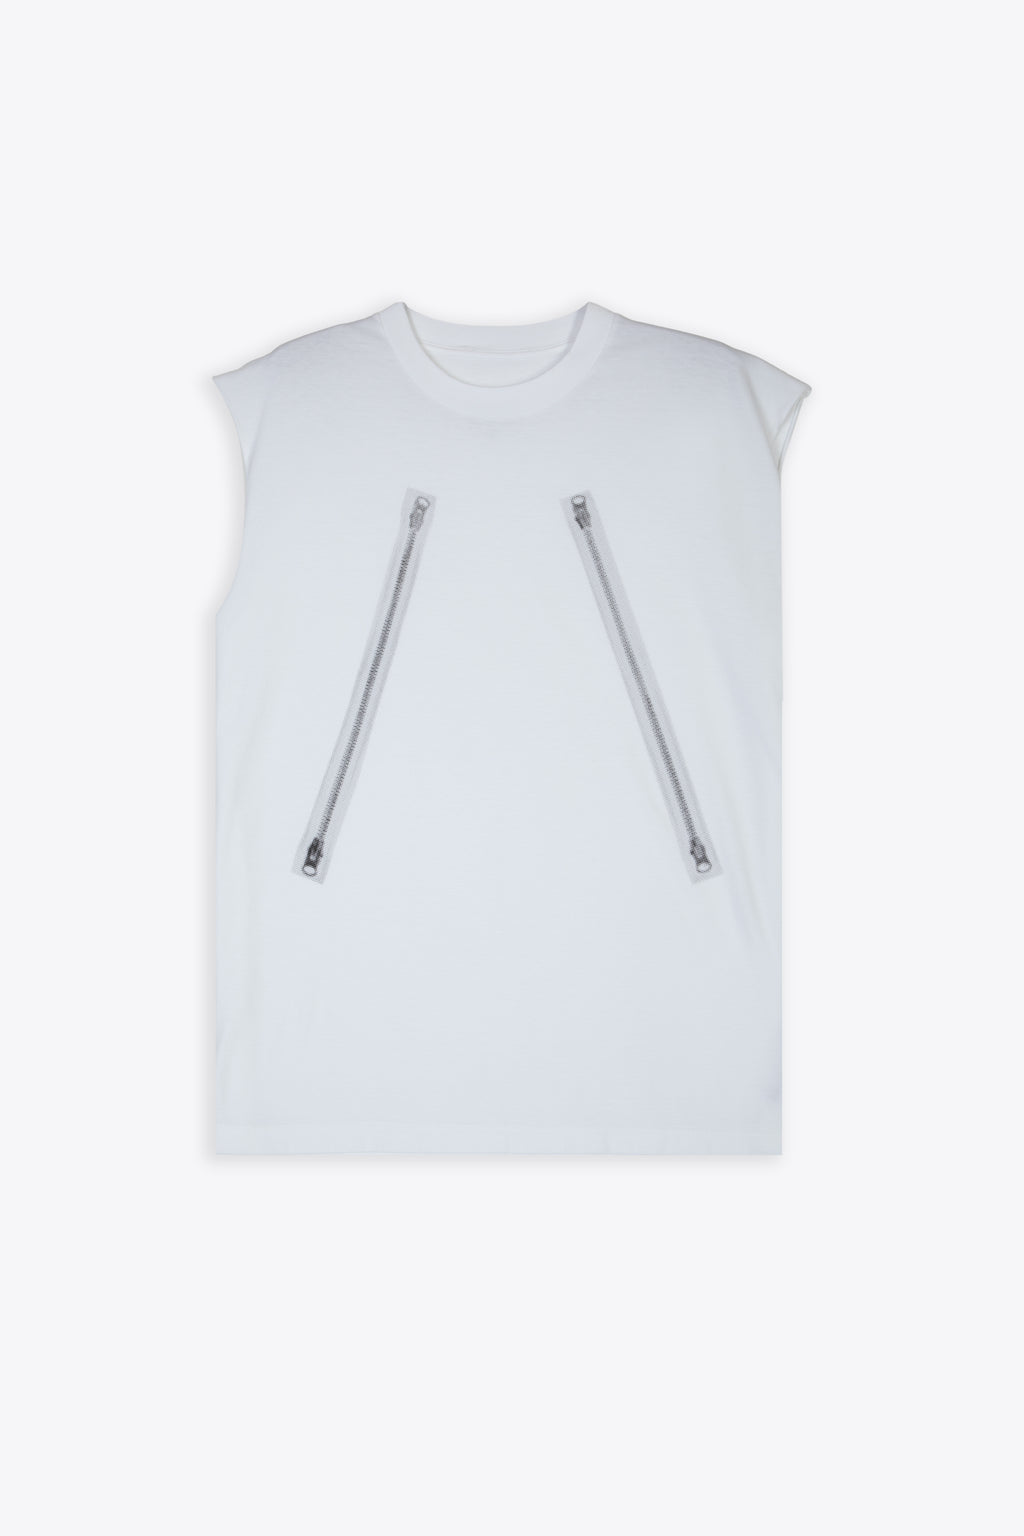 alt-image__White-sleveless-t-shirt-with-zip-print